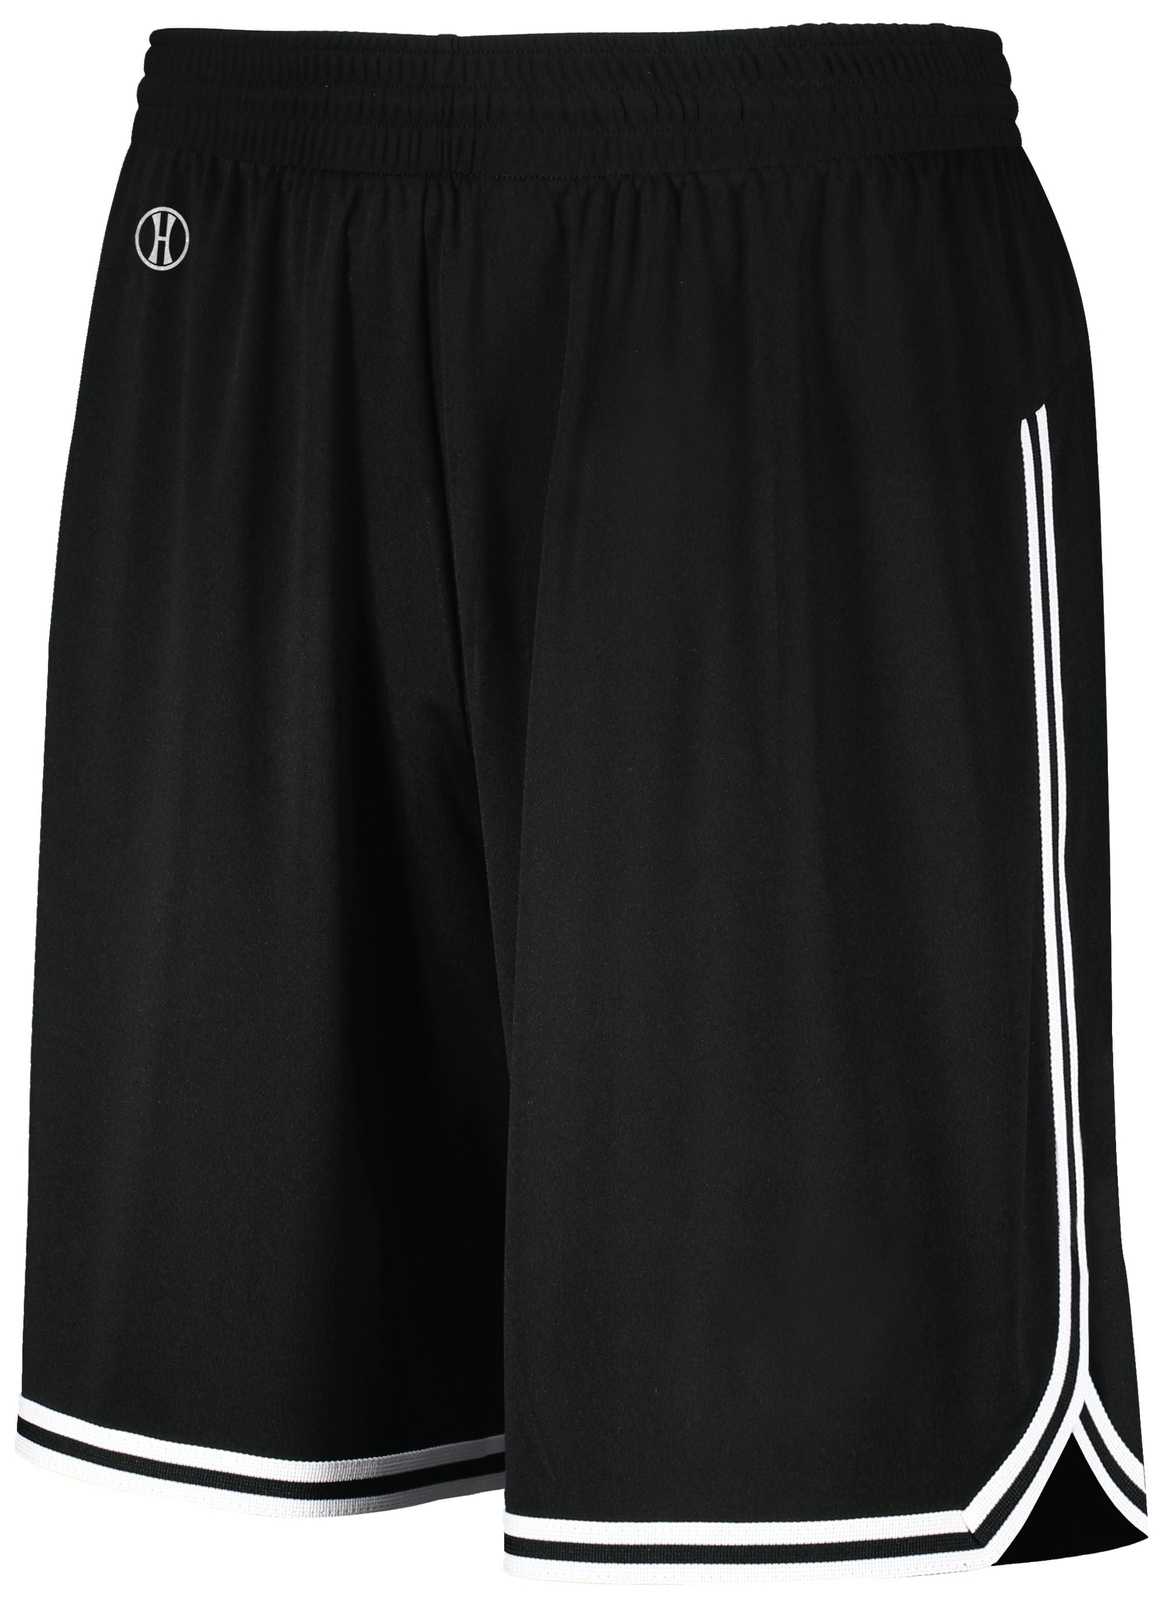 Holloway 224277 Youth Retro Basketball Shorts - Black White - HIT a Double